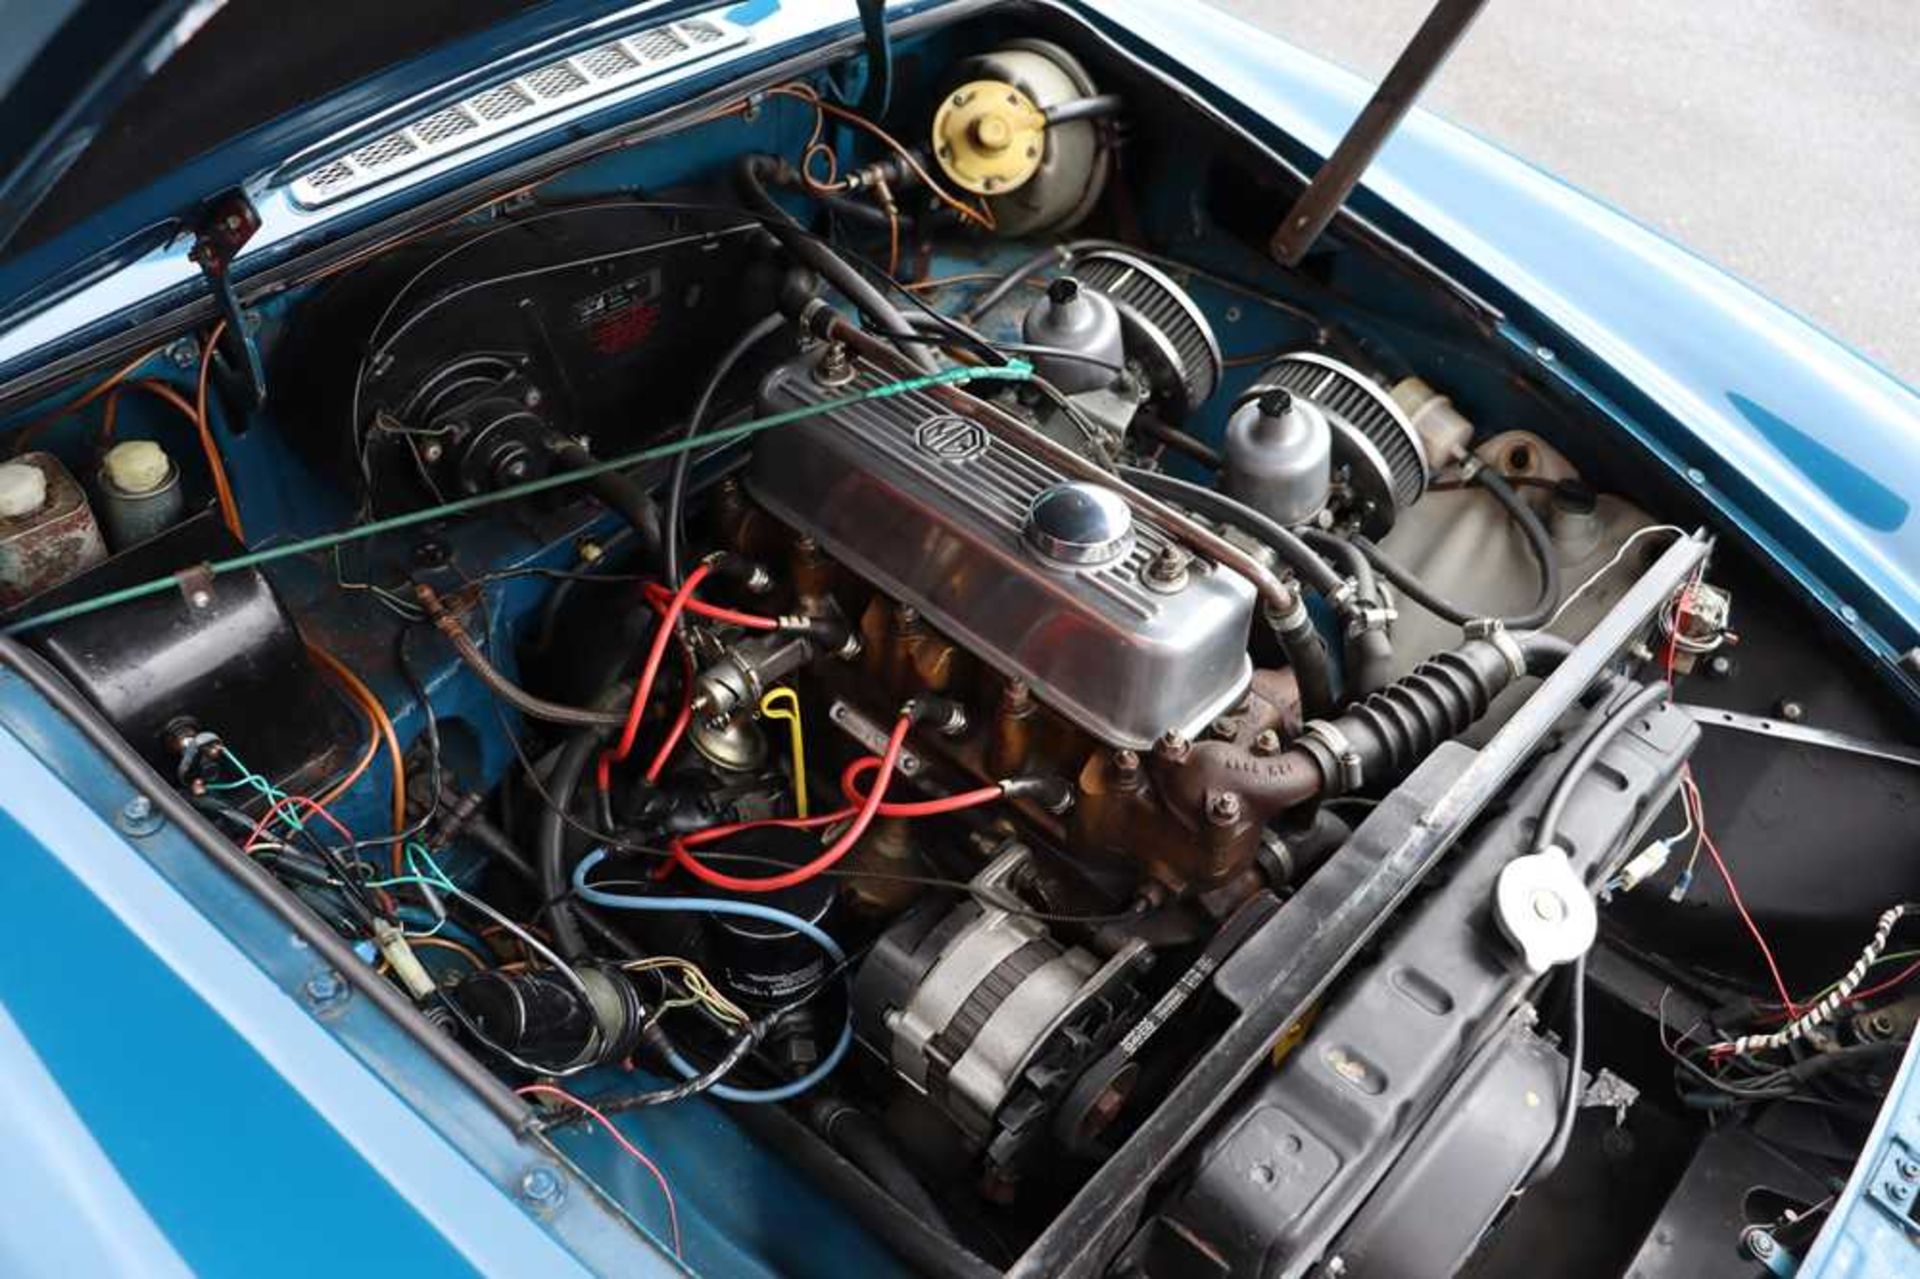 1975 MG B Roadster - Image 49 of 60